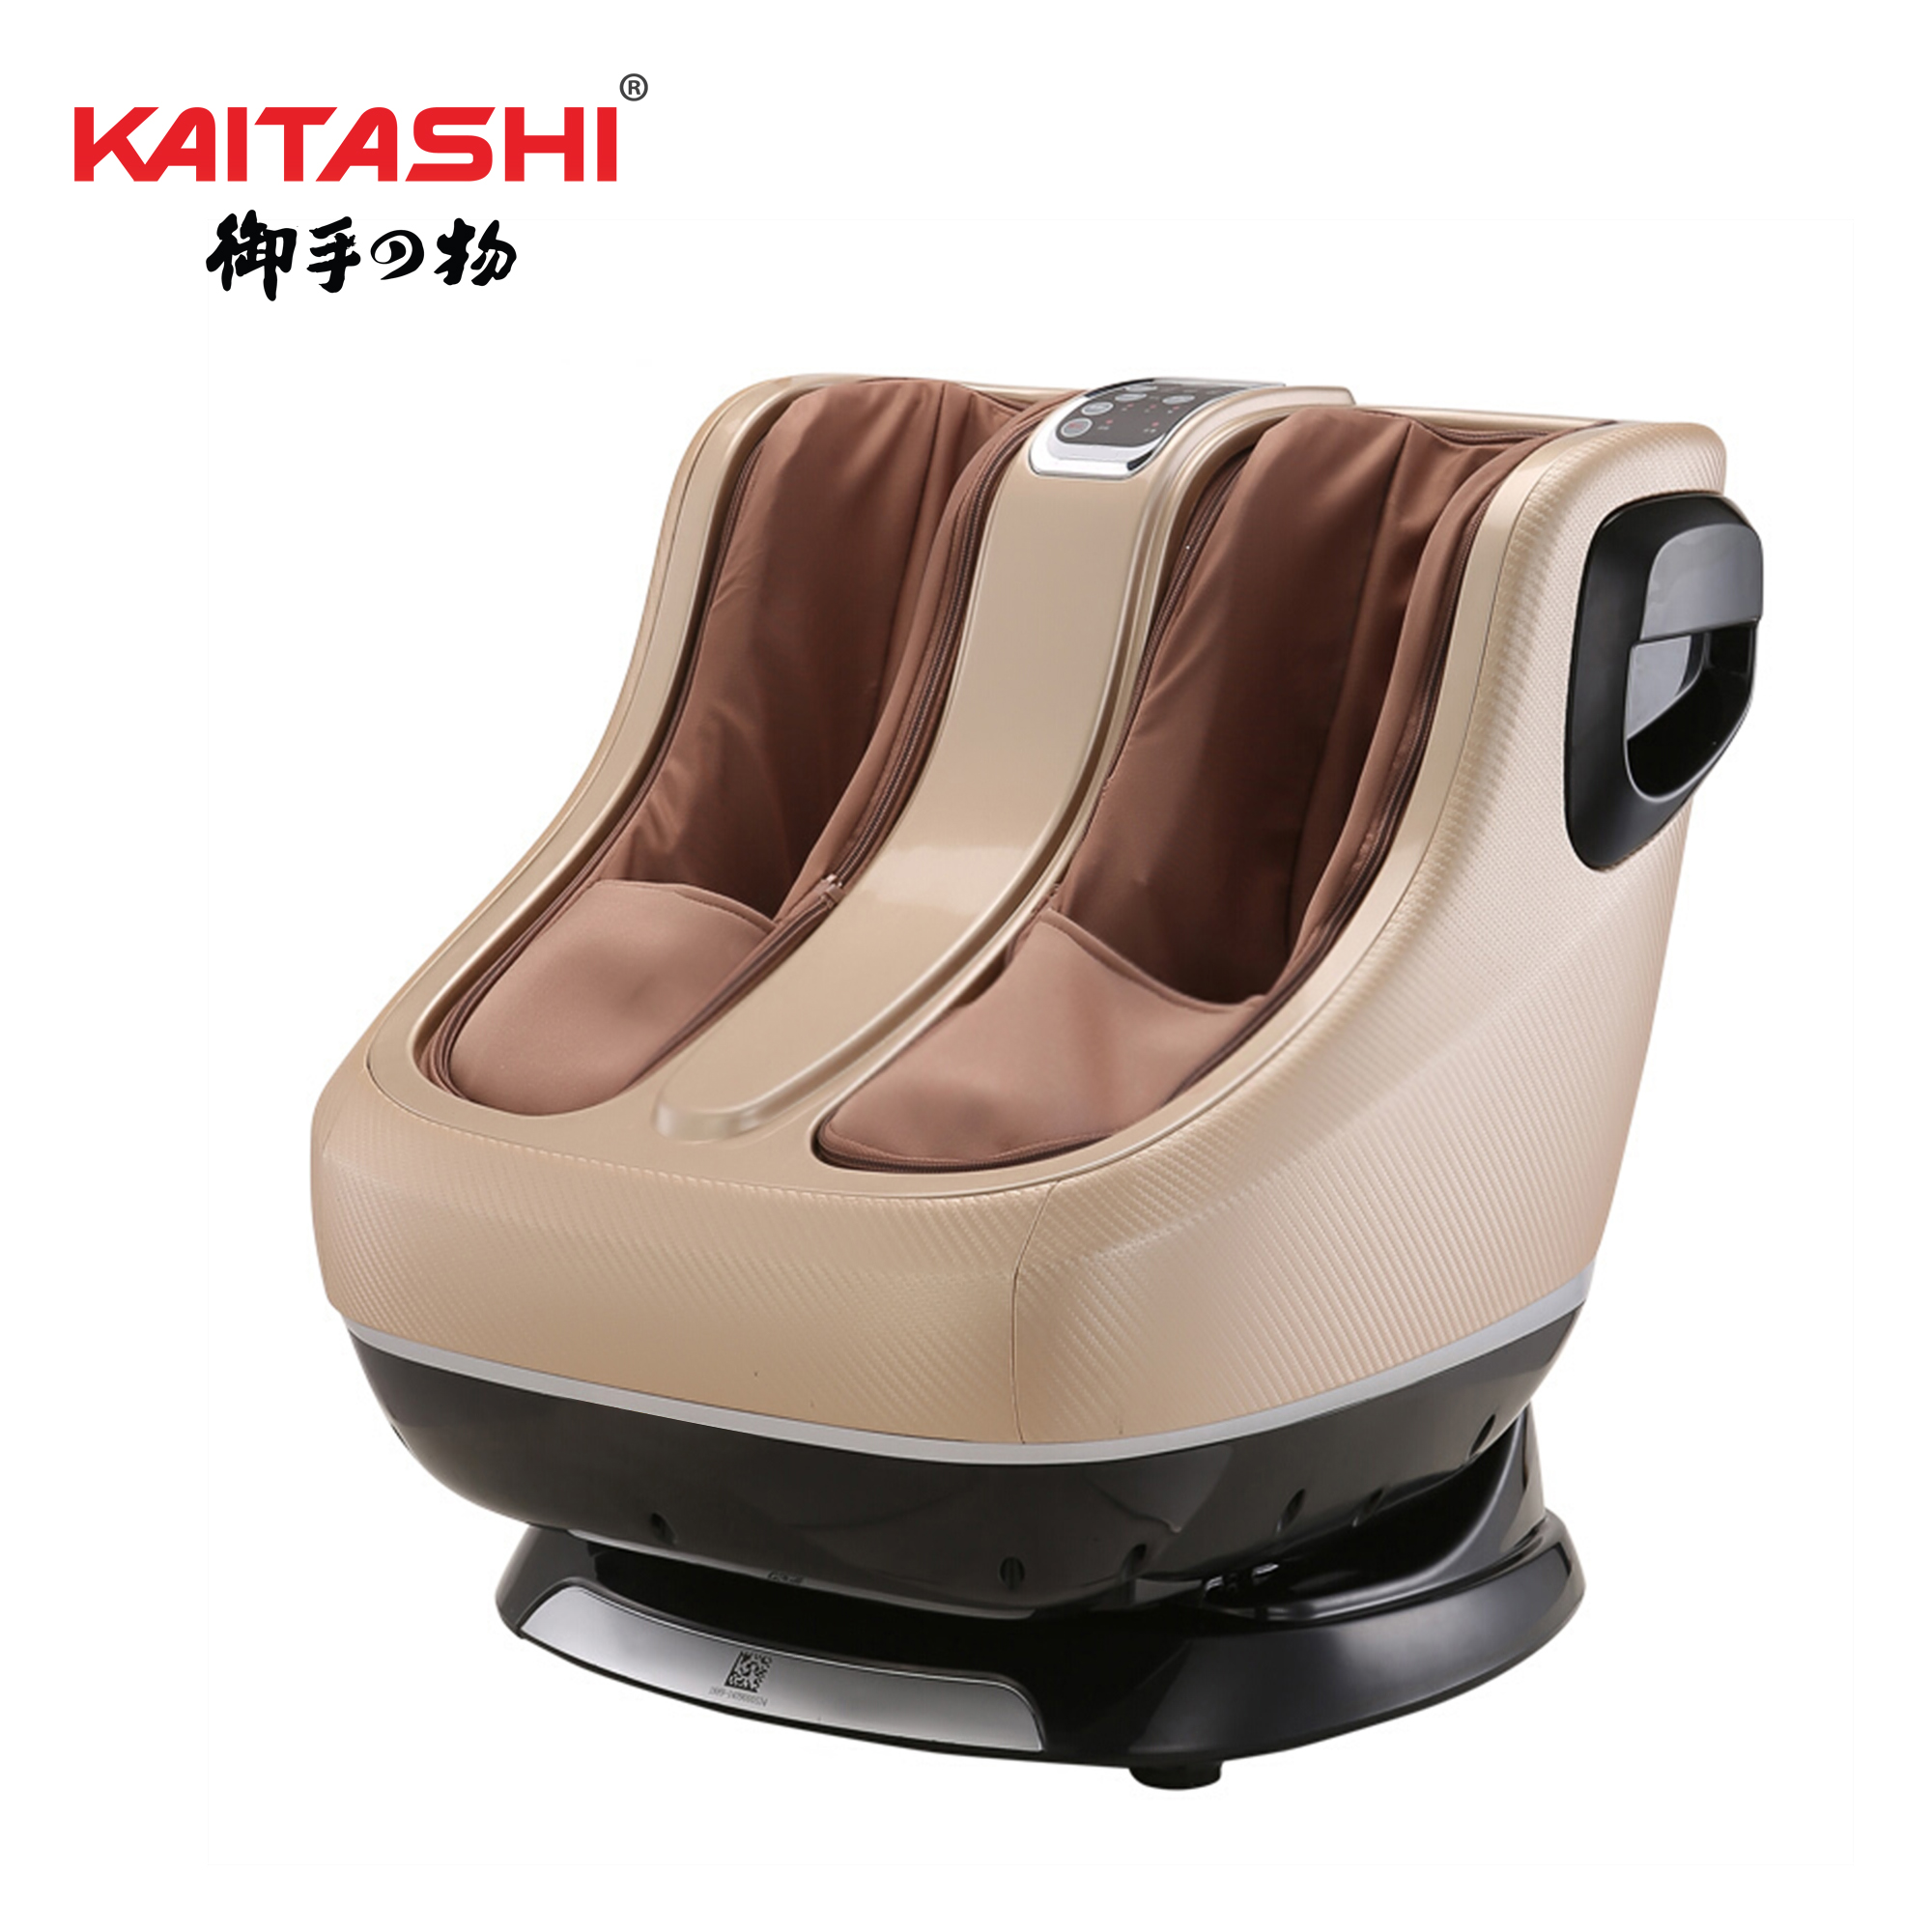 Máy massage chân Kaitashi KS-683